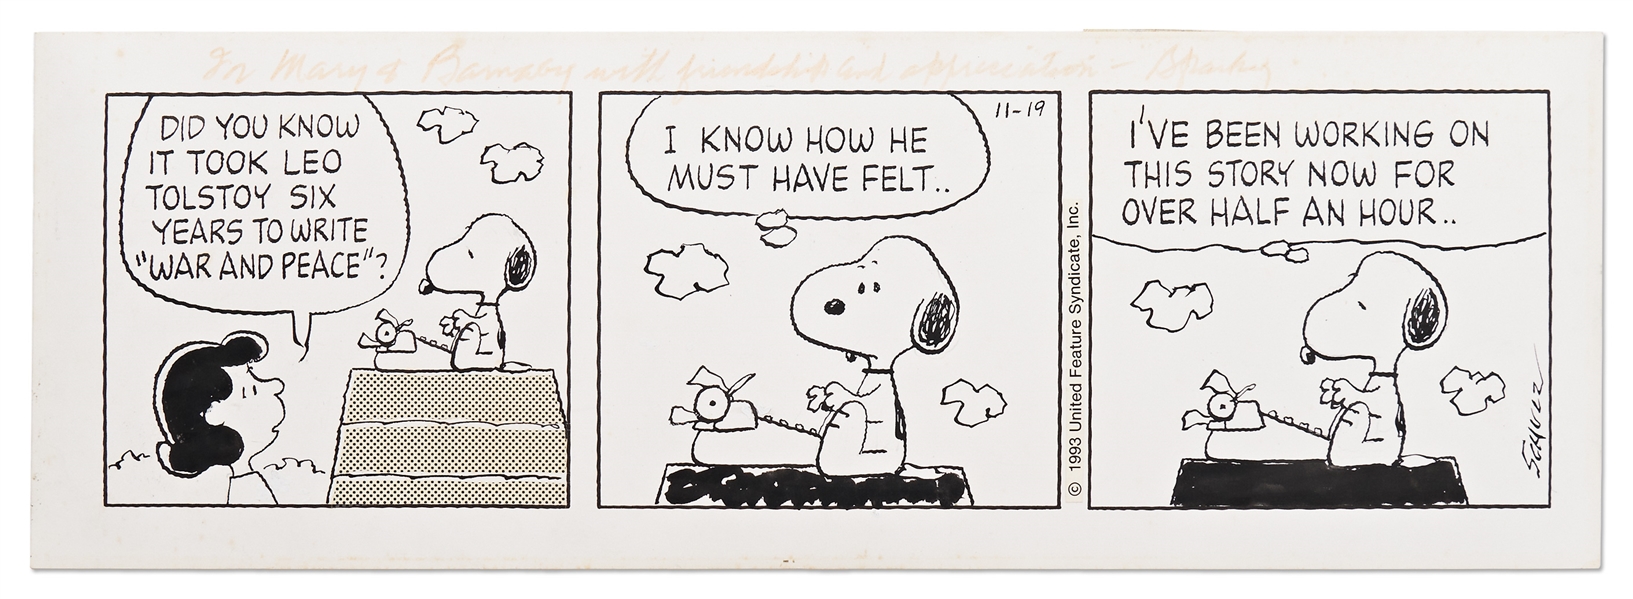 Charles Schulz Original Hand-Drawn ''Peanuts'' Comic Strip Featuring Snoopy the Novelist